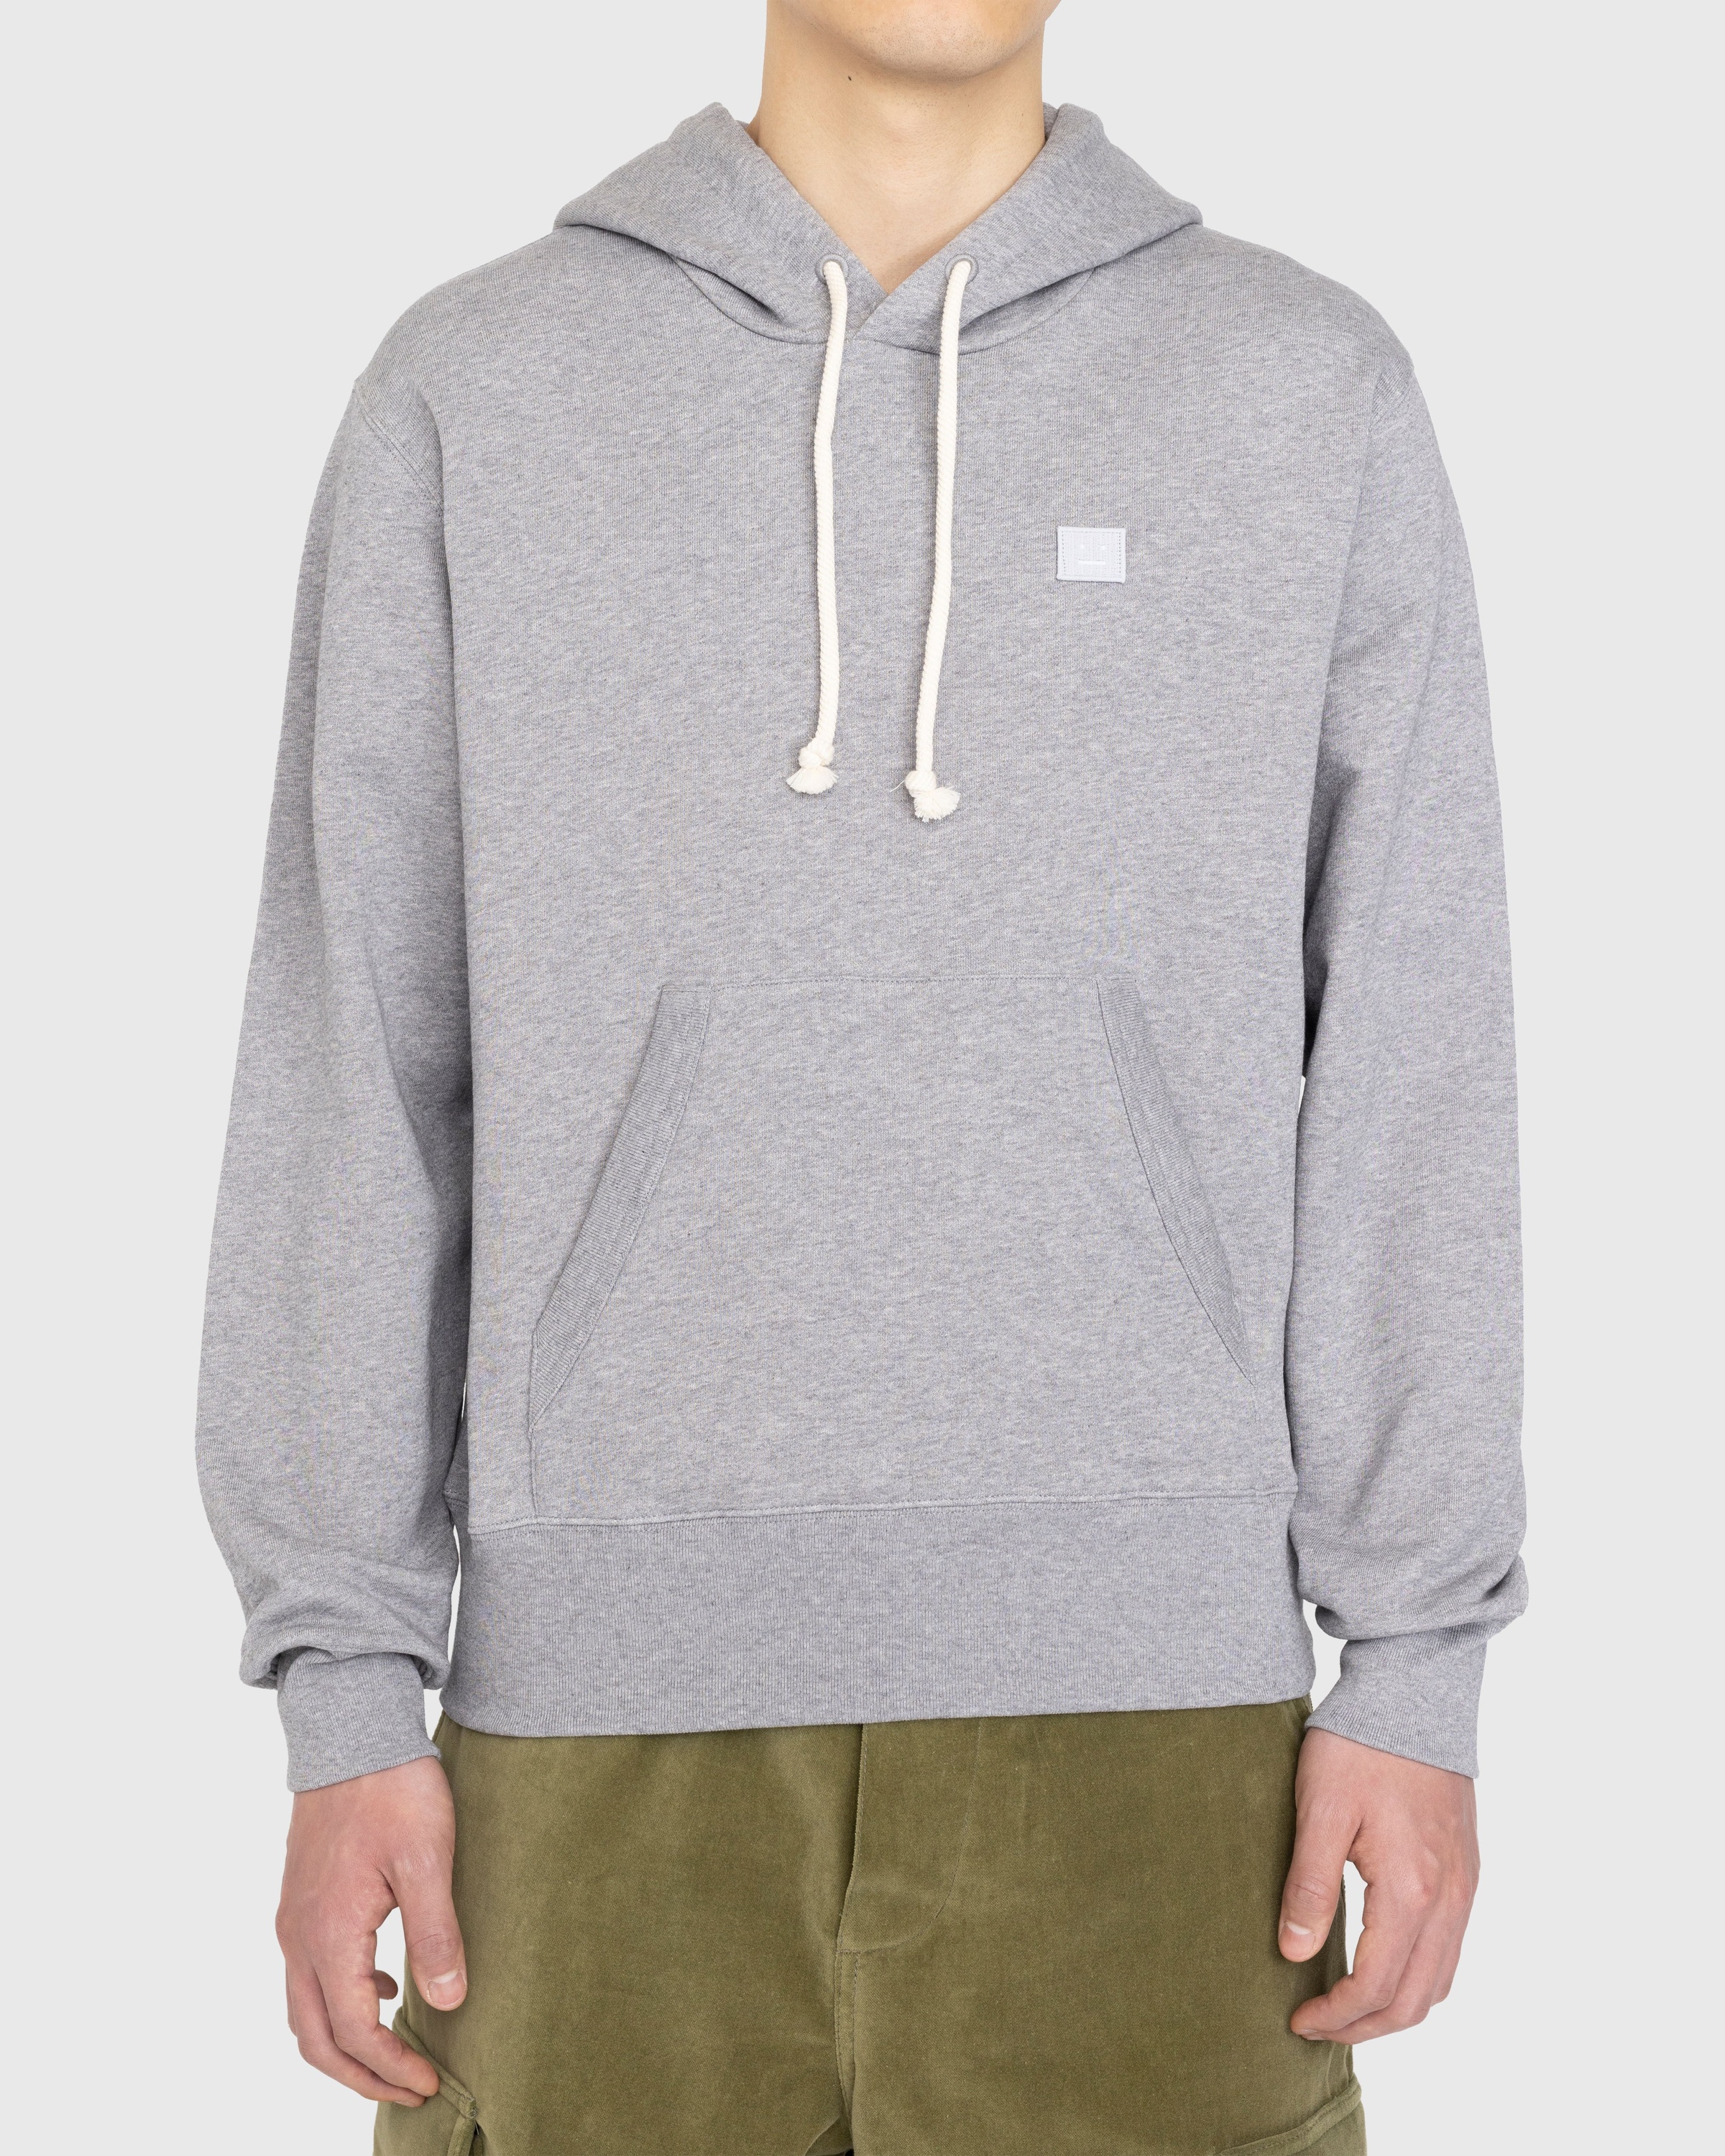 Acne Studios – Organic Cotton Hooded Sweatshirt Grey - Sweats - Grey - Image 2